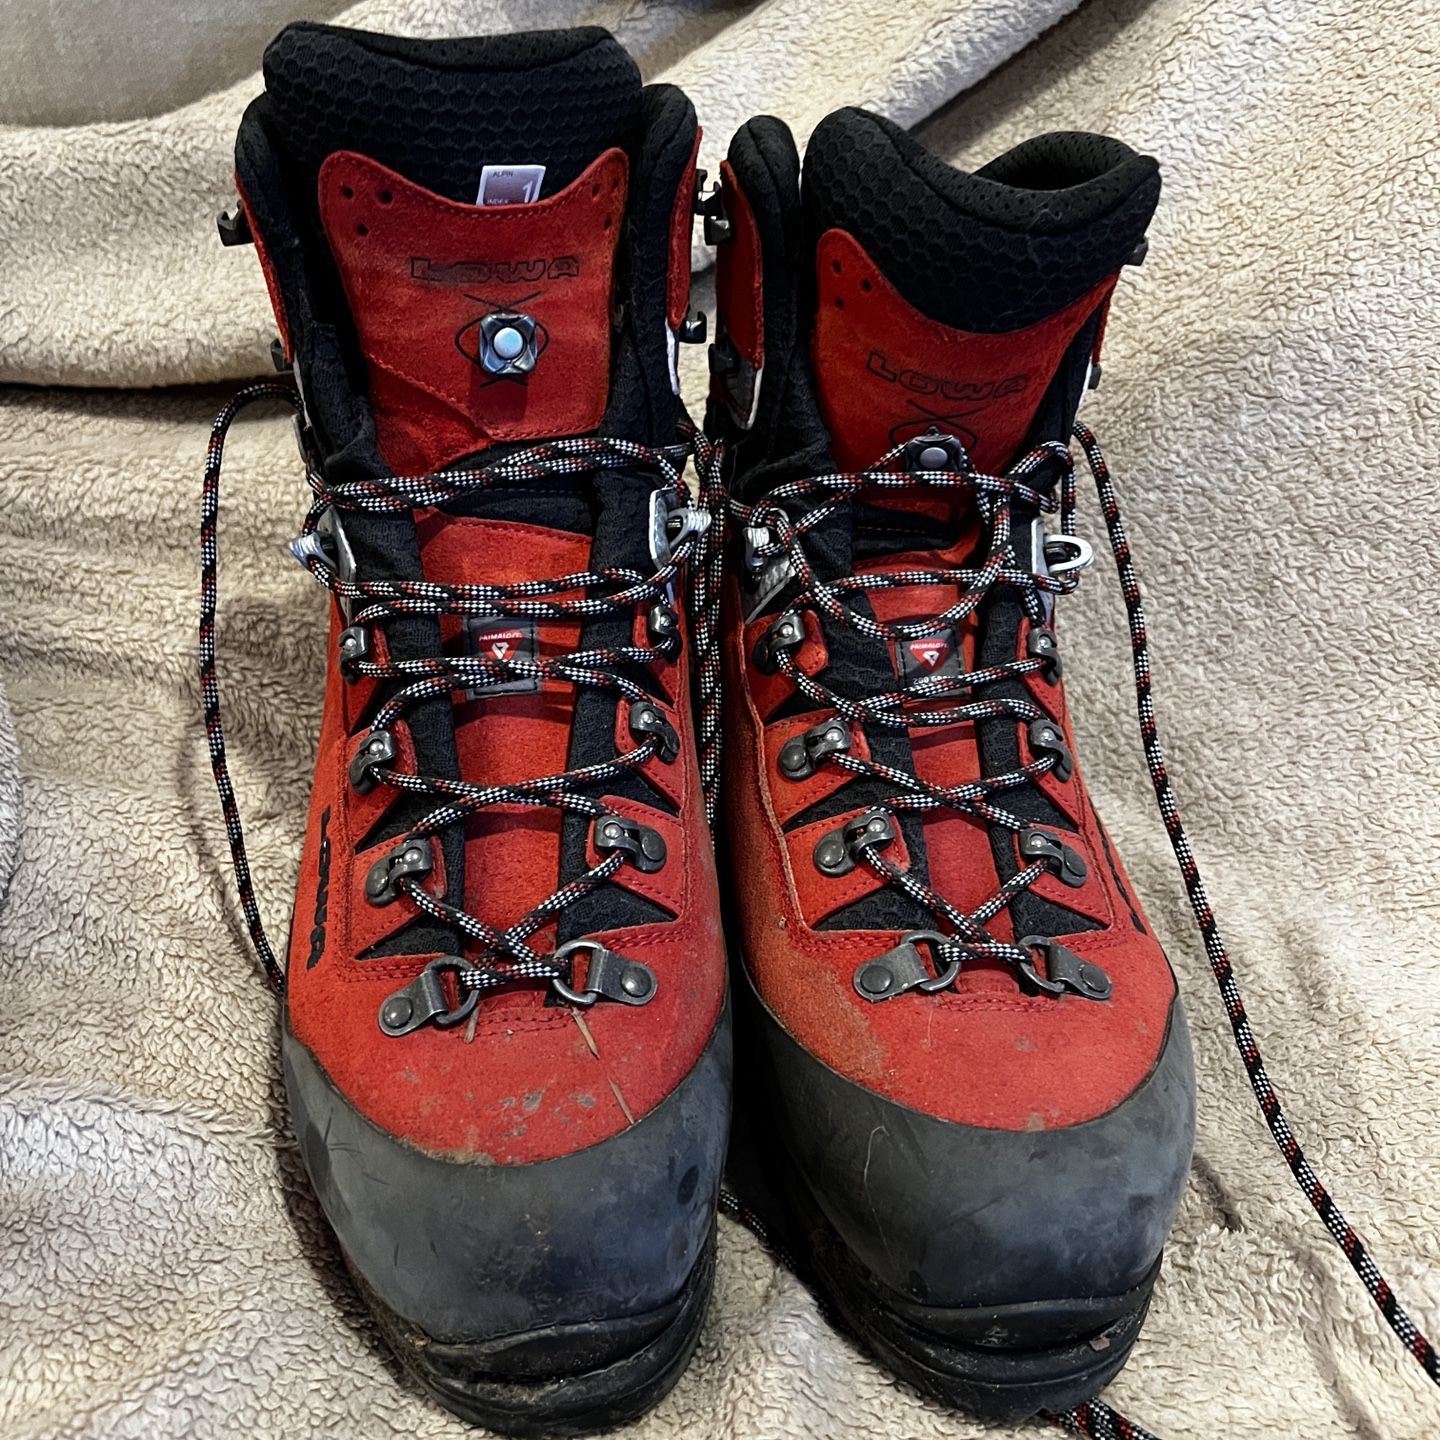 Lowa mountaineering boots (US 11.5)